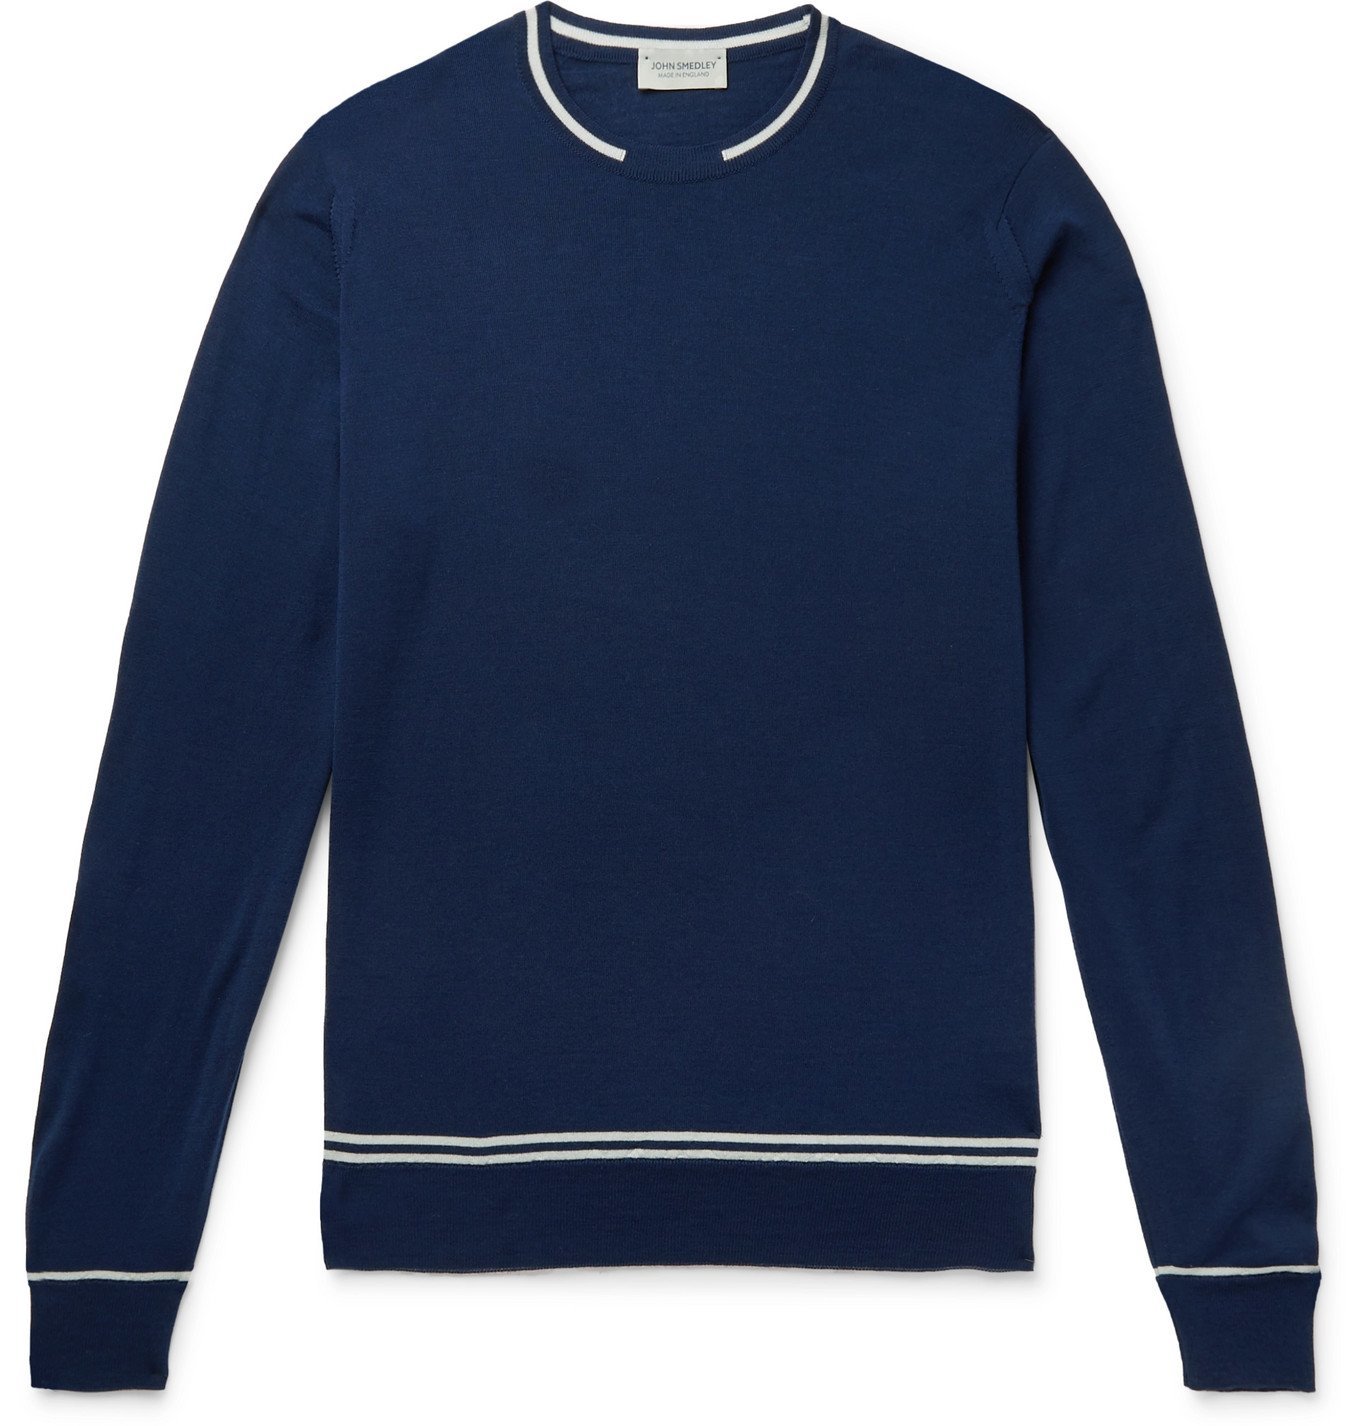 John Smedley - Turnbull Slim-Fit Striped Wool Sweater - Blue John Smedley